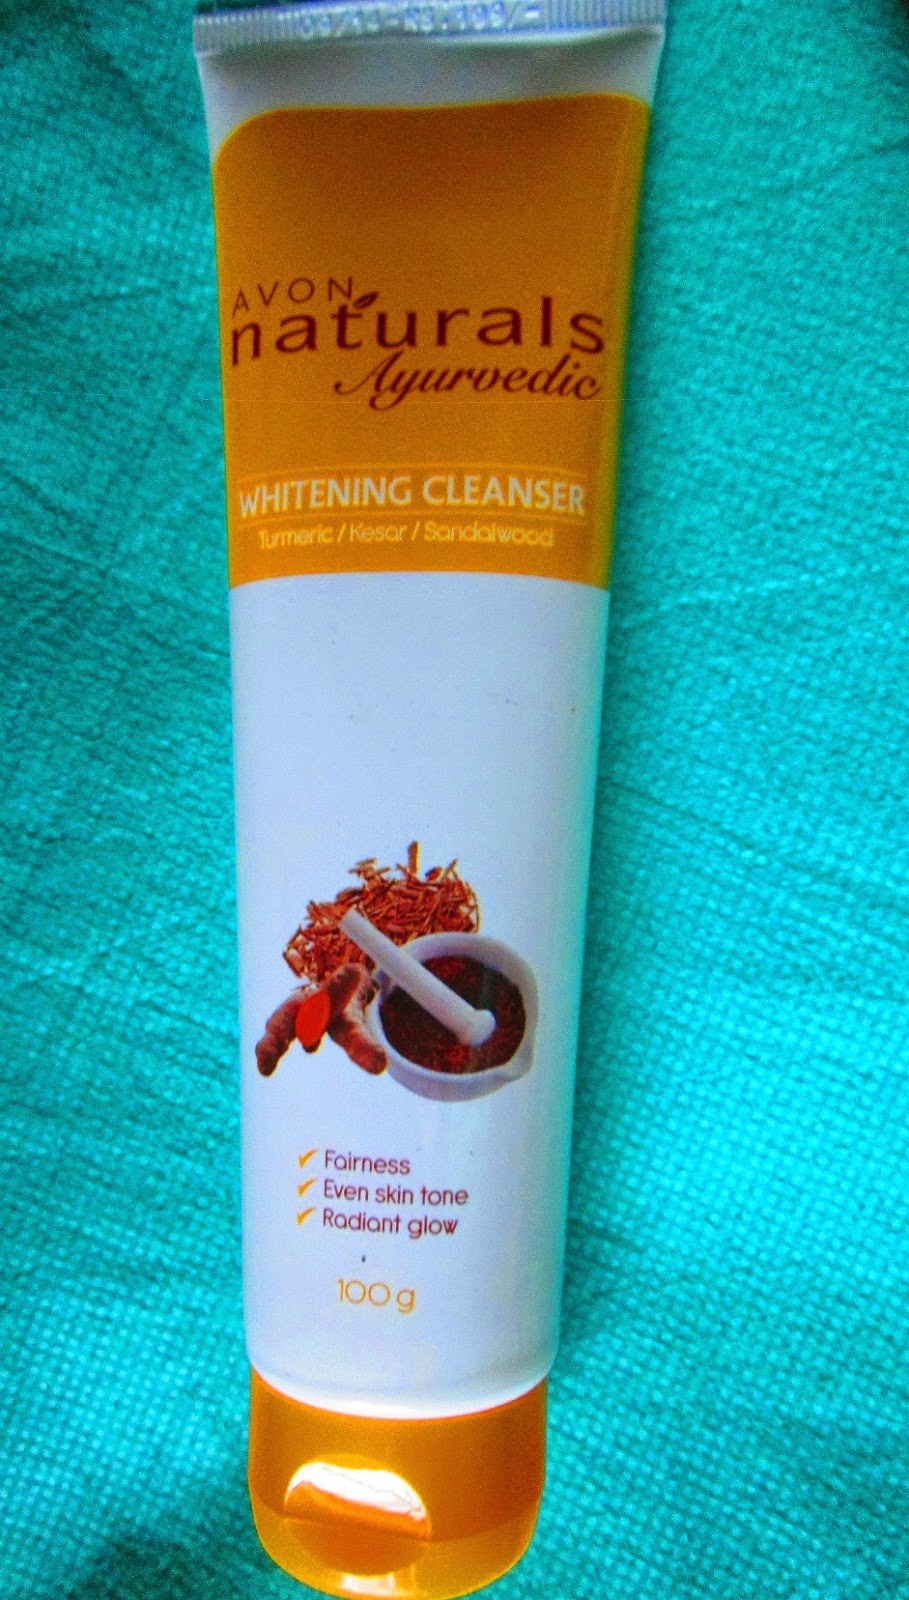 Avon naturals ayurvedic whitening cleanser (Turmeric/ Kesar/ sandalwood) reviews